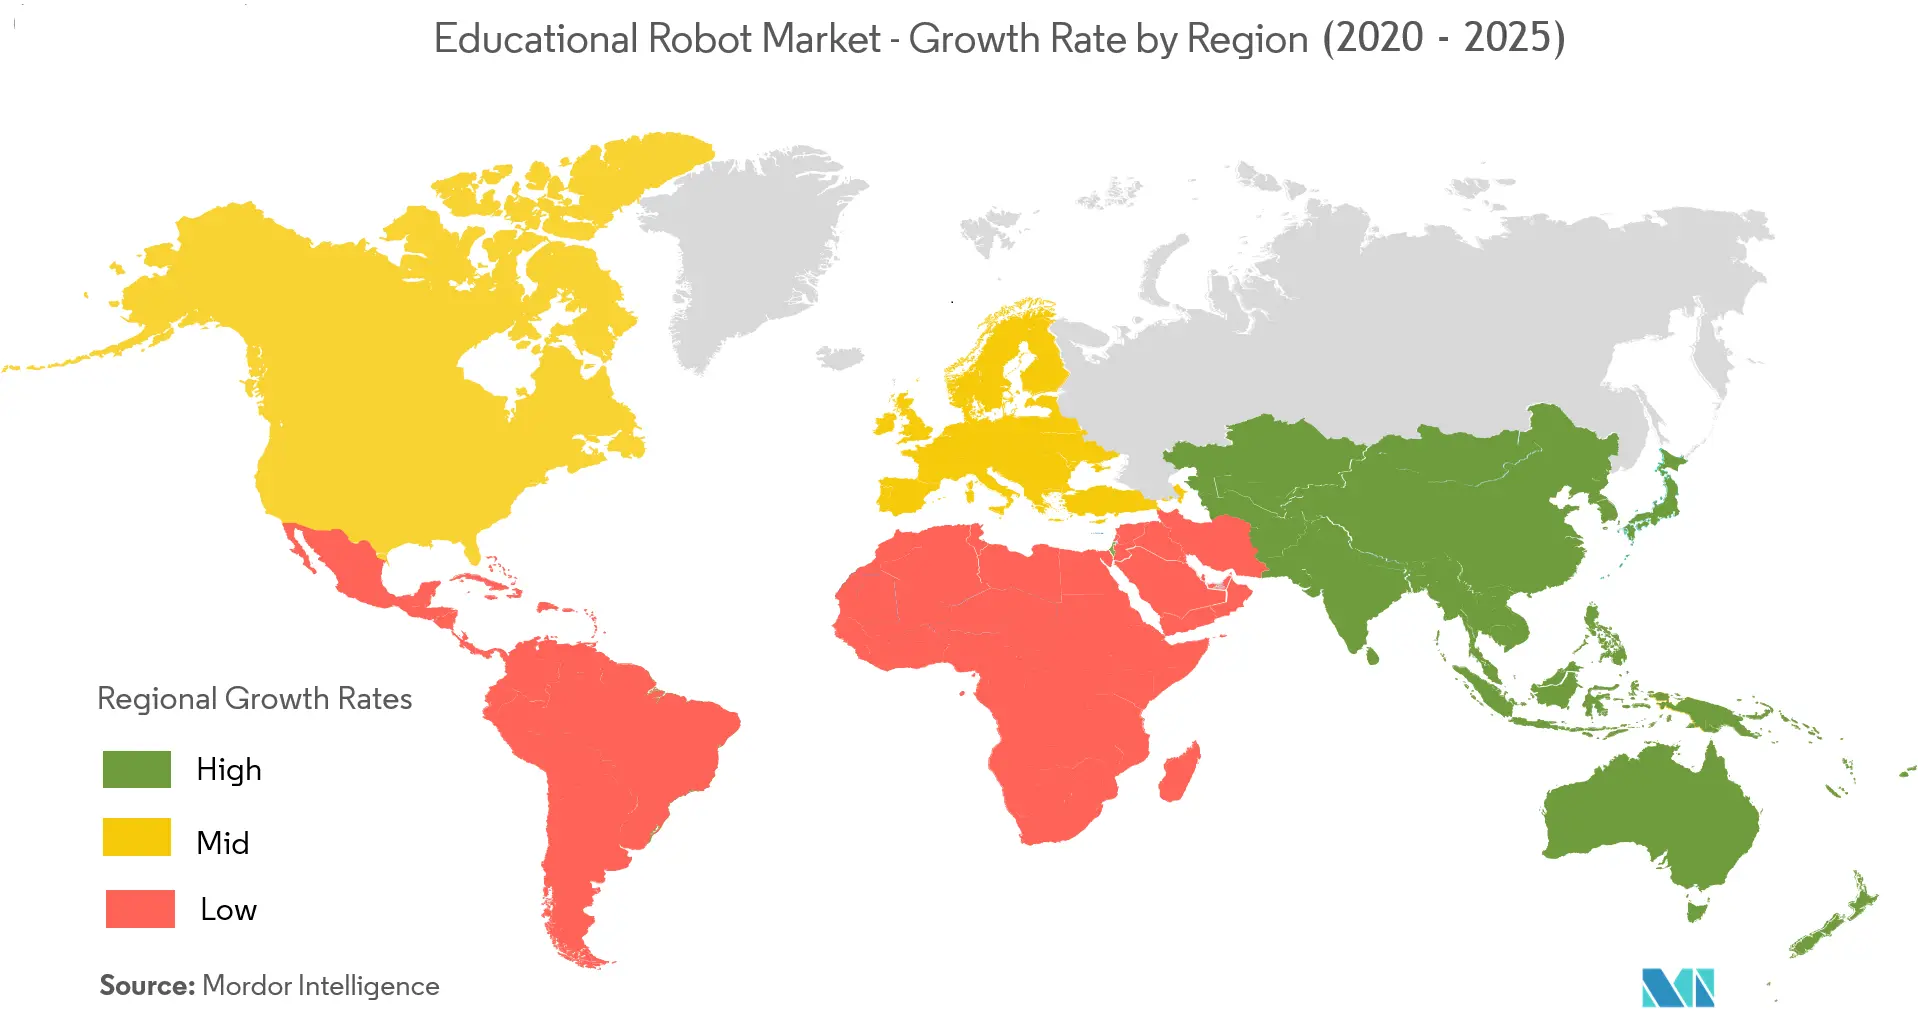 Educational Robot Market Outlook